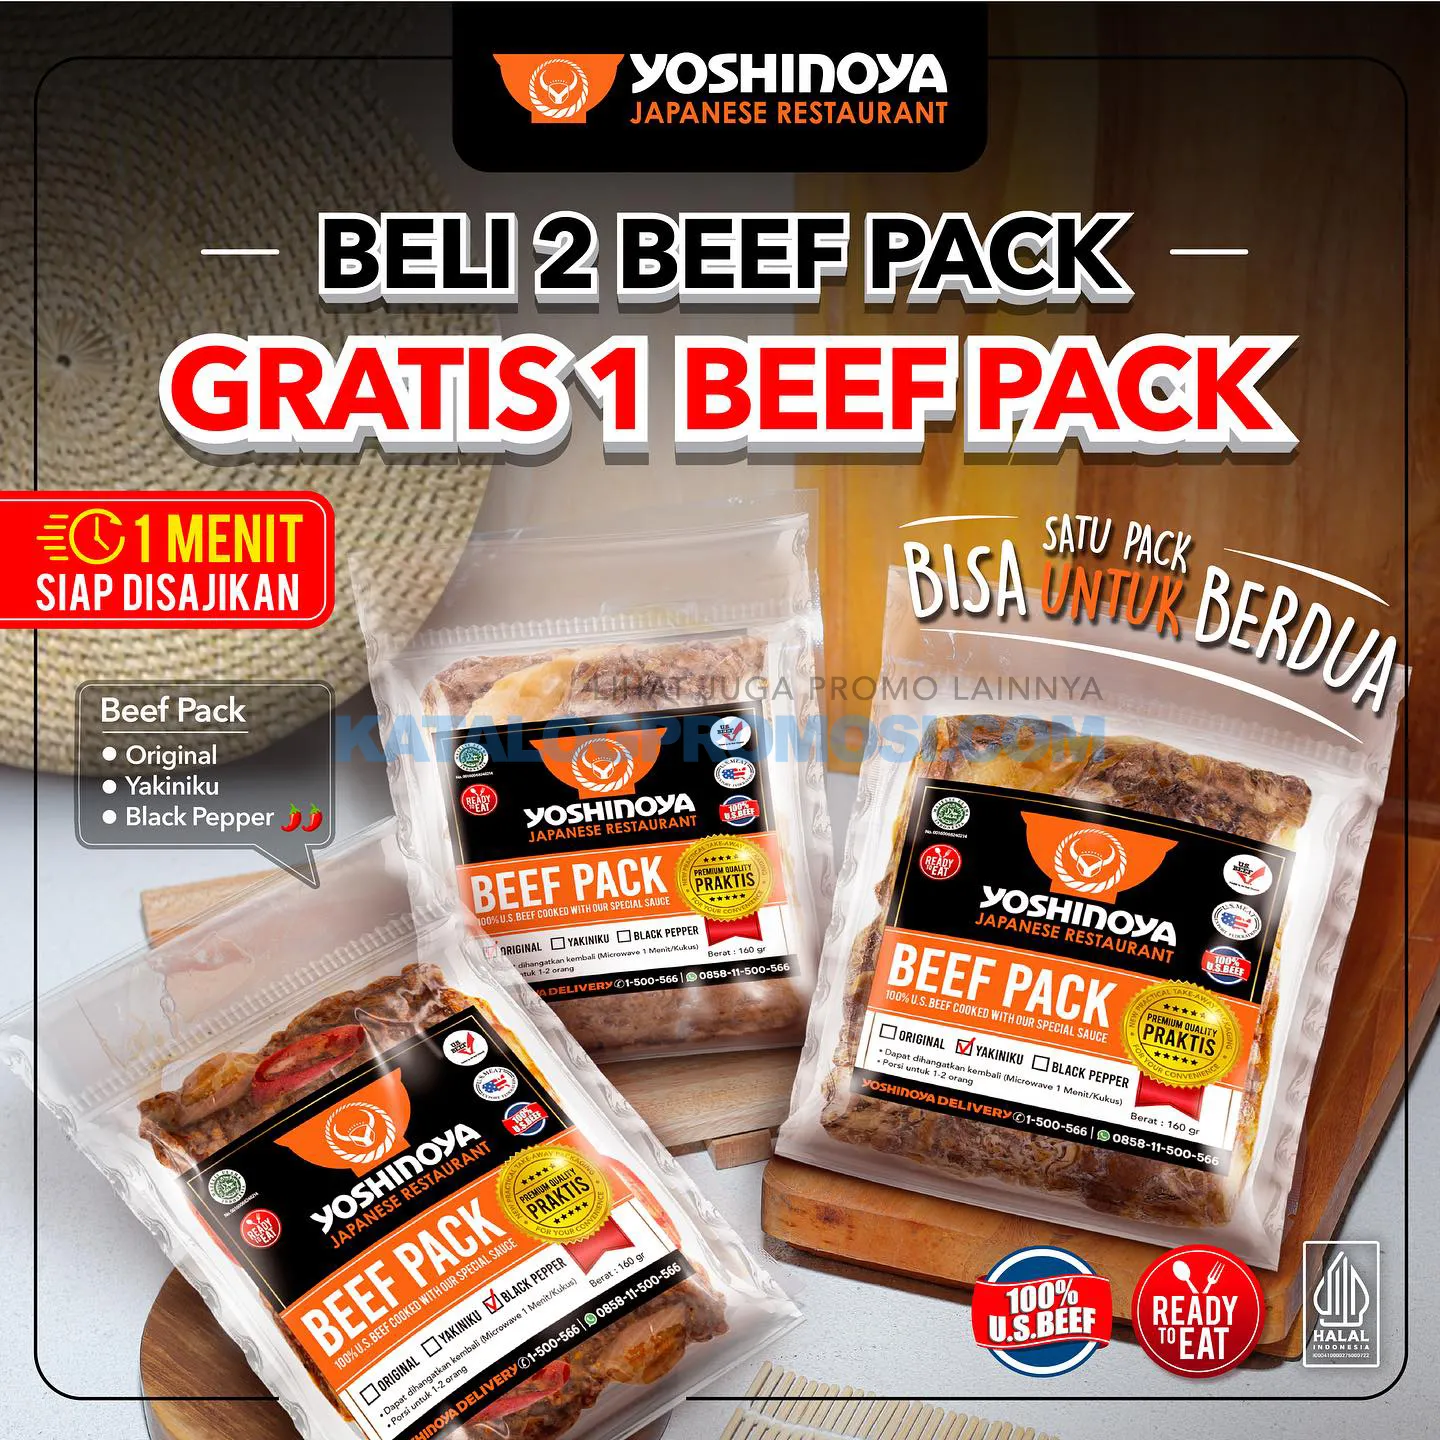 Promo YOSHINOYA Beli 2 Beef Pack, GRATIS 1 Beef Pack